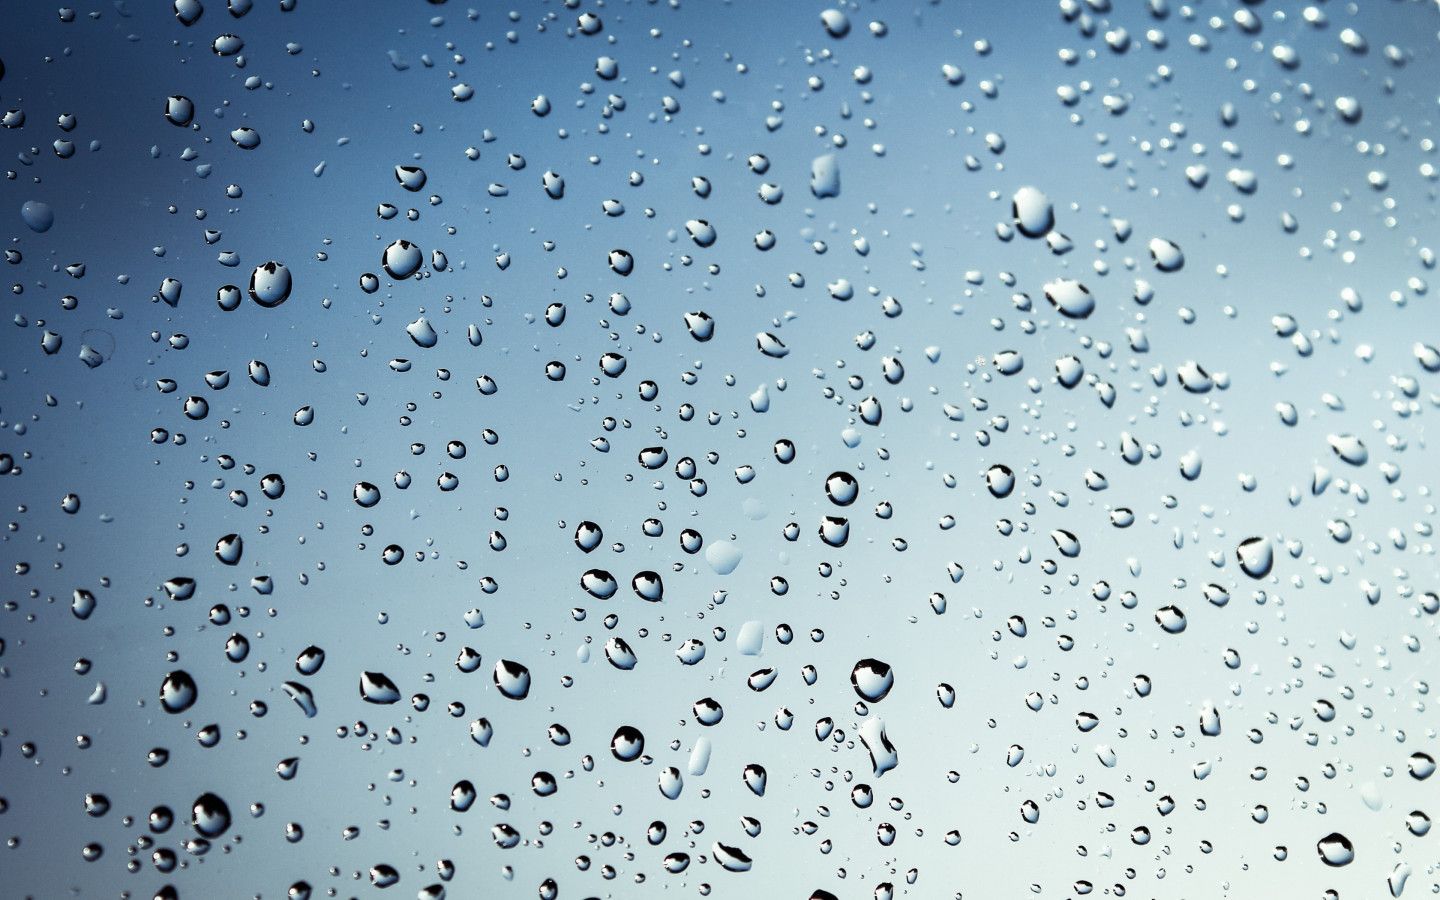 Download wallpaper: Rain drops on window 1440x900